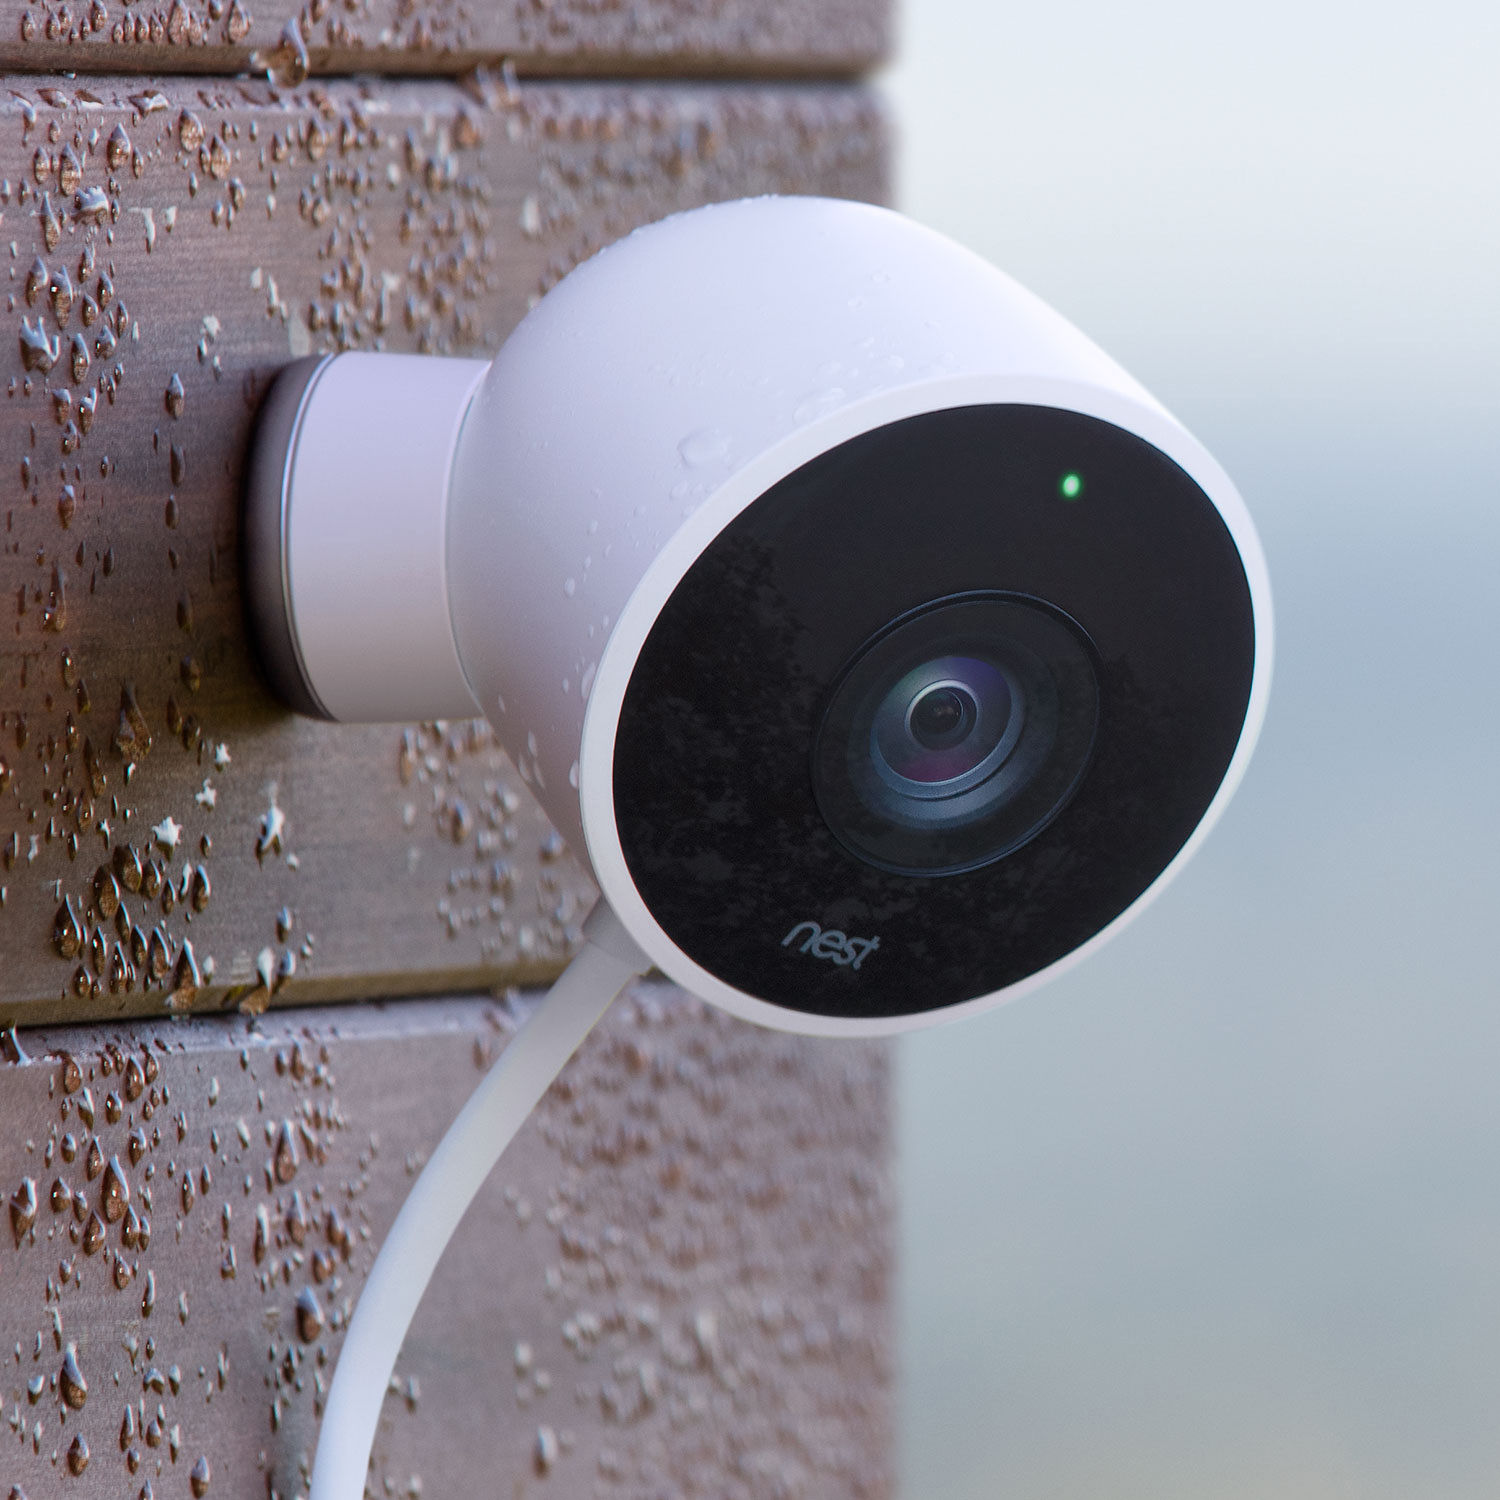 nest cam outdoor security camera 4 pack